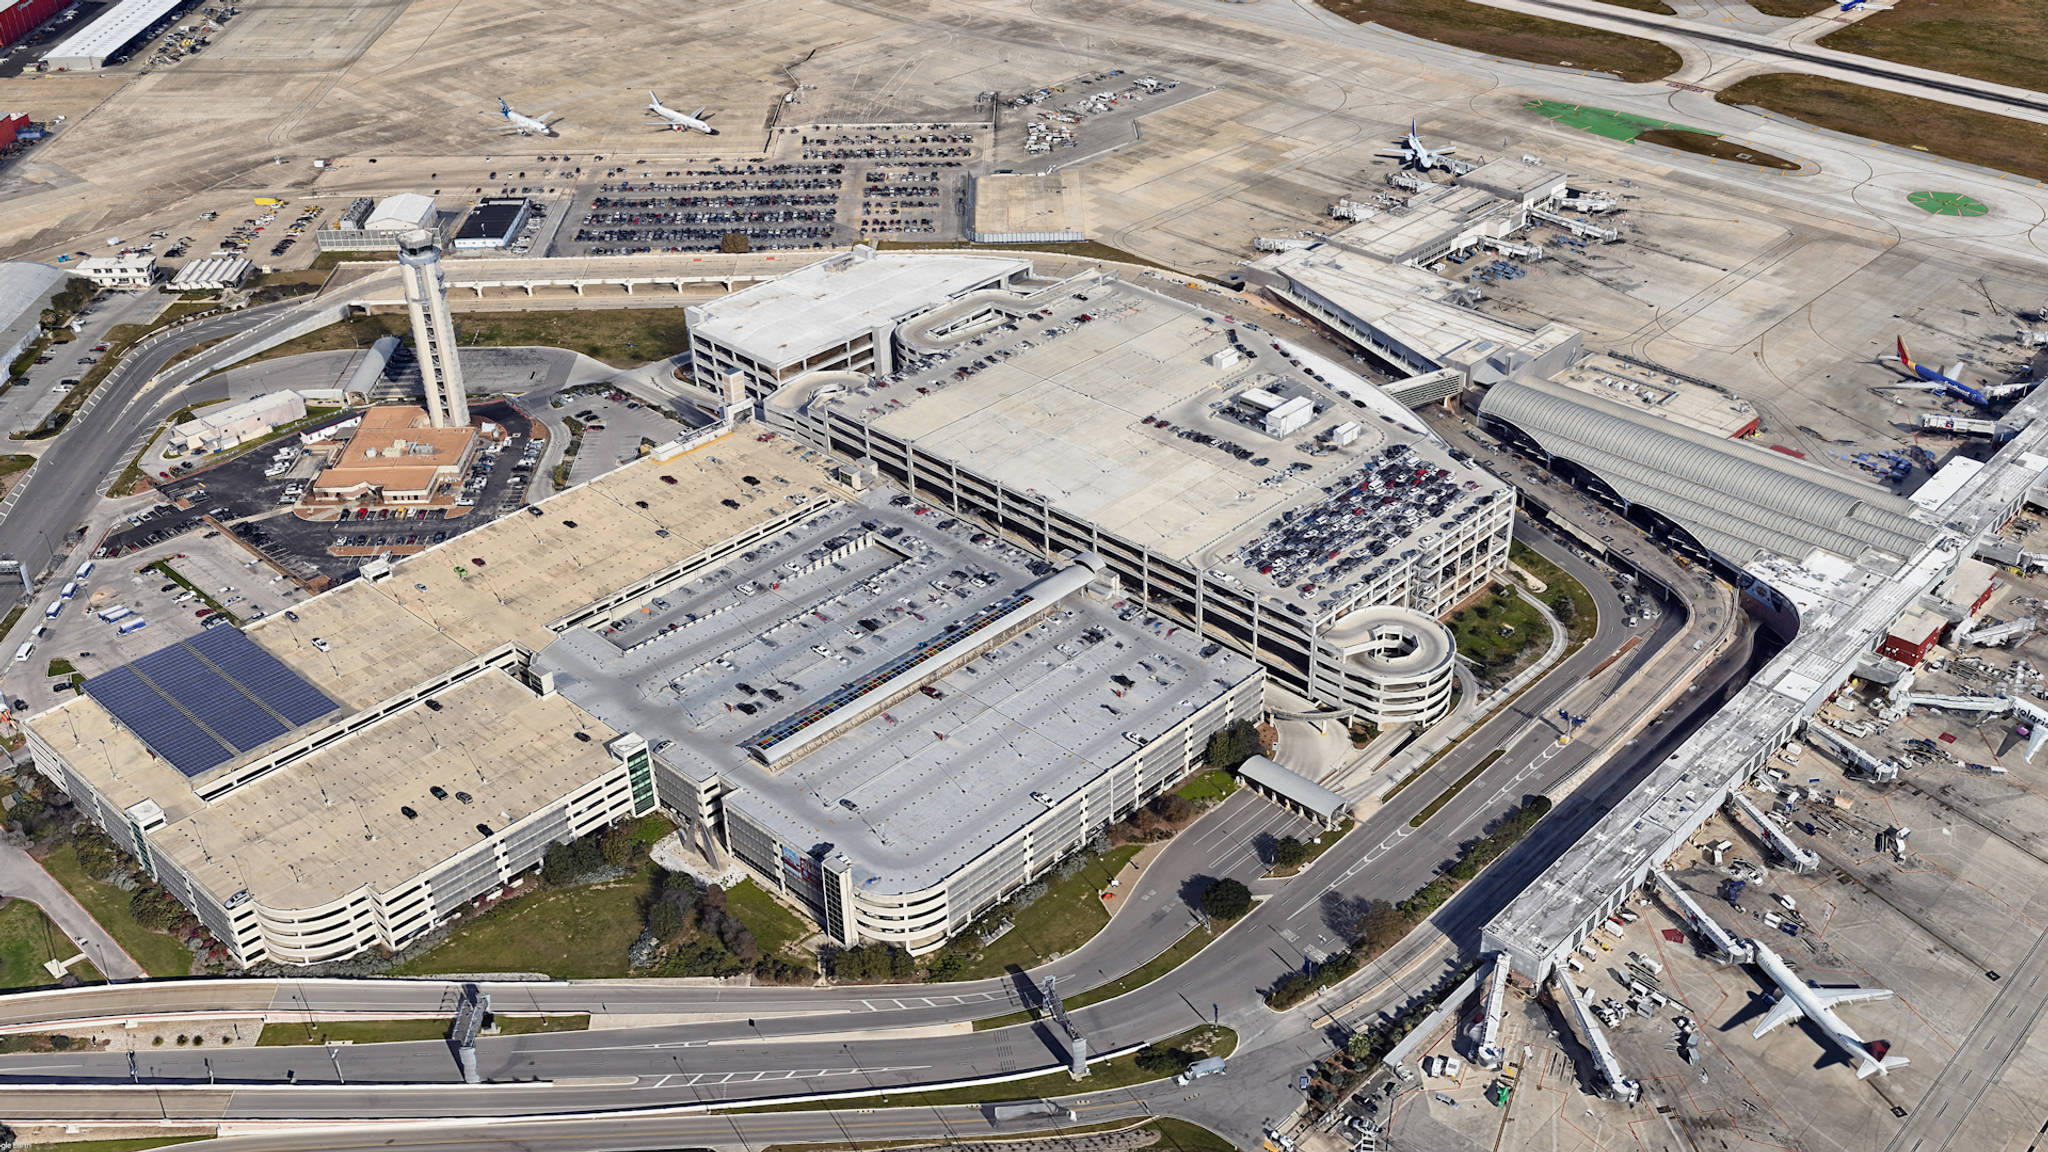  Aerial View of San Antonio Airport Parking